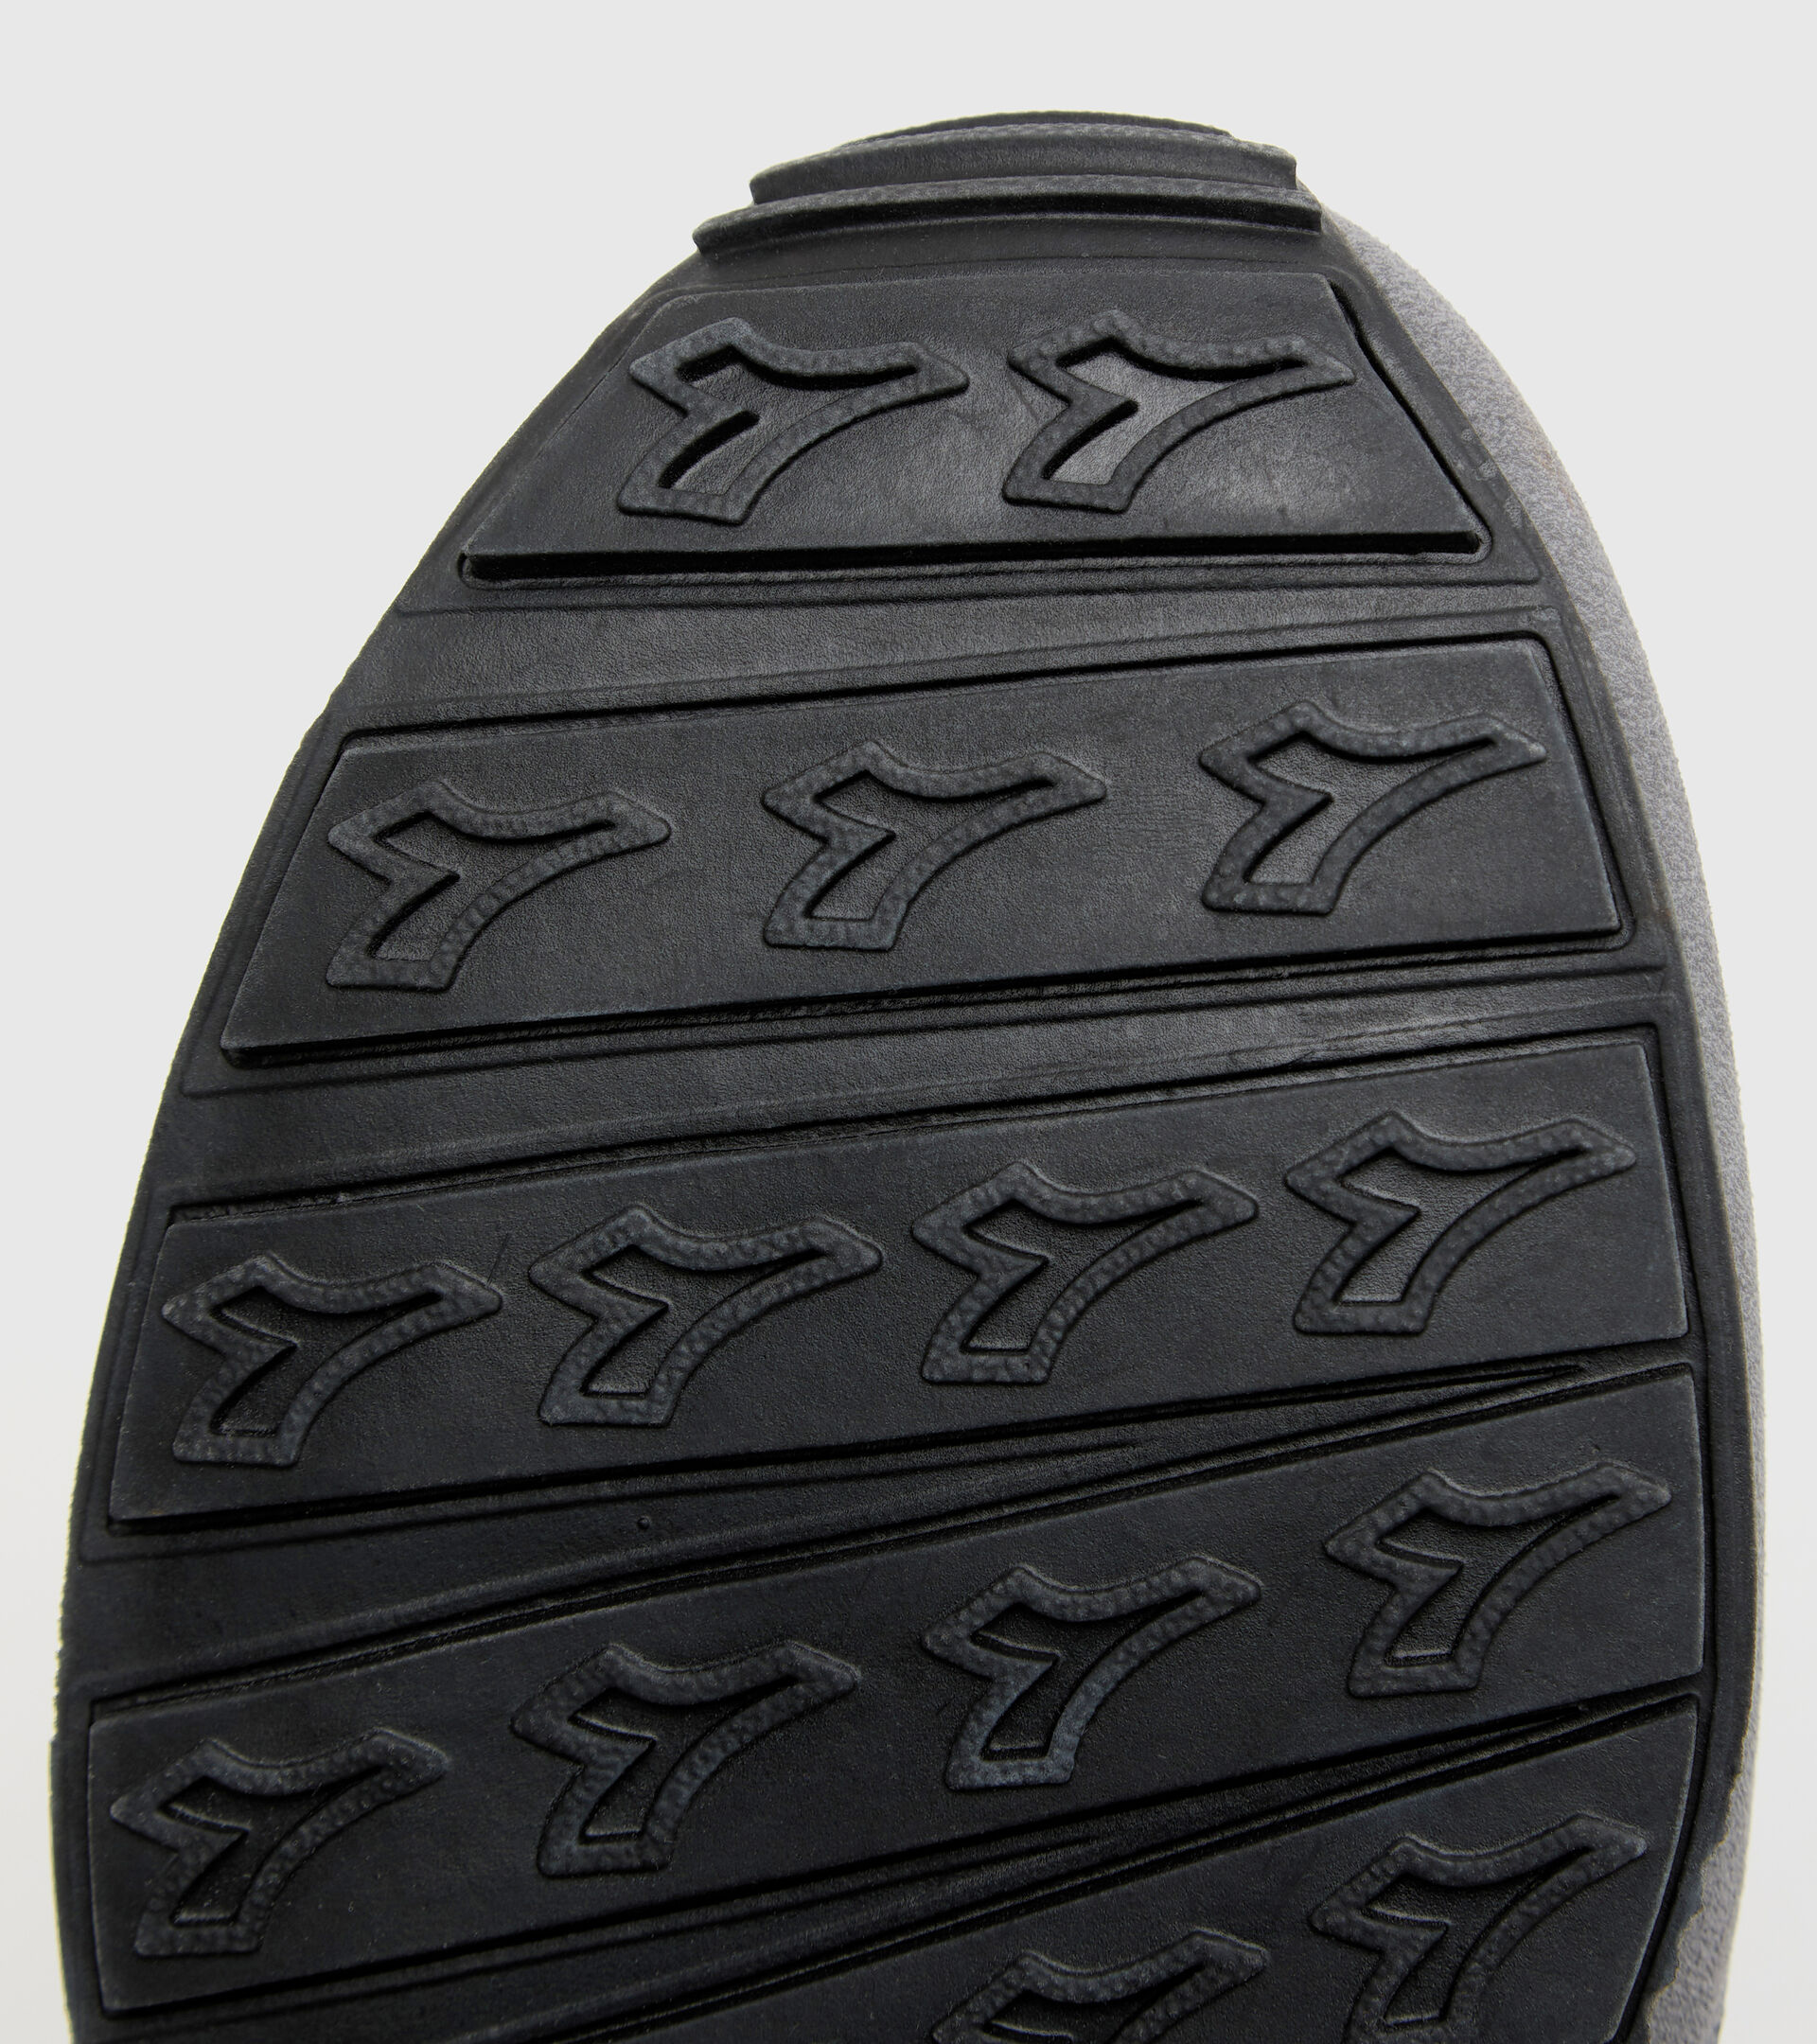 Chaussures de sport - Unisexe CAMARO METAL NOIR - Diadora